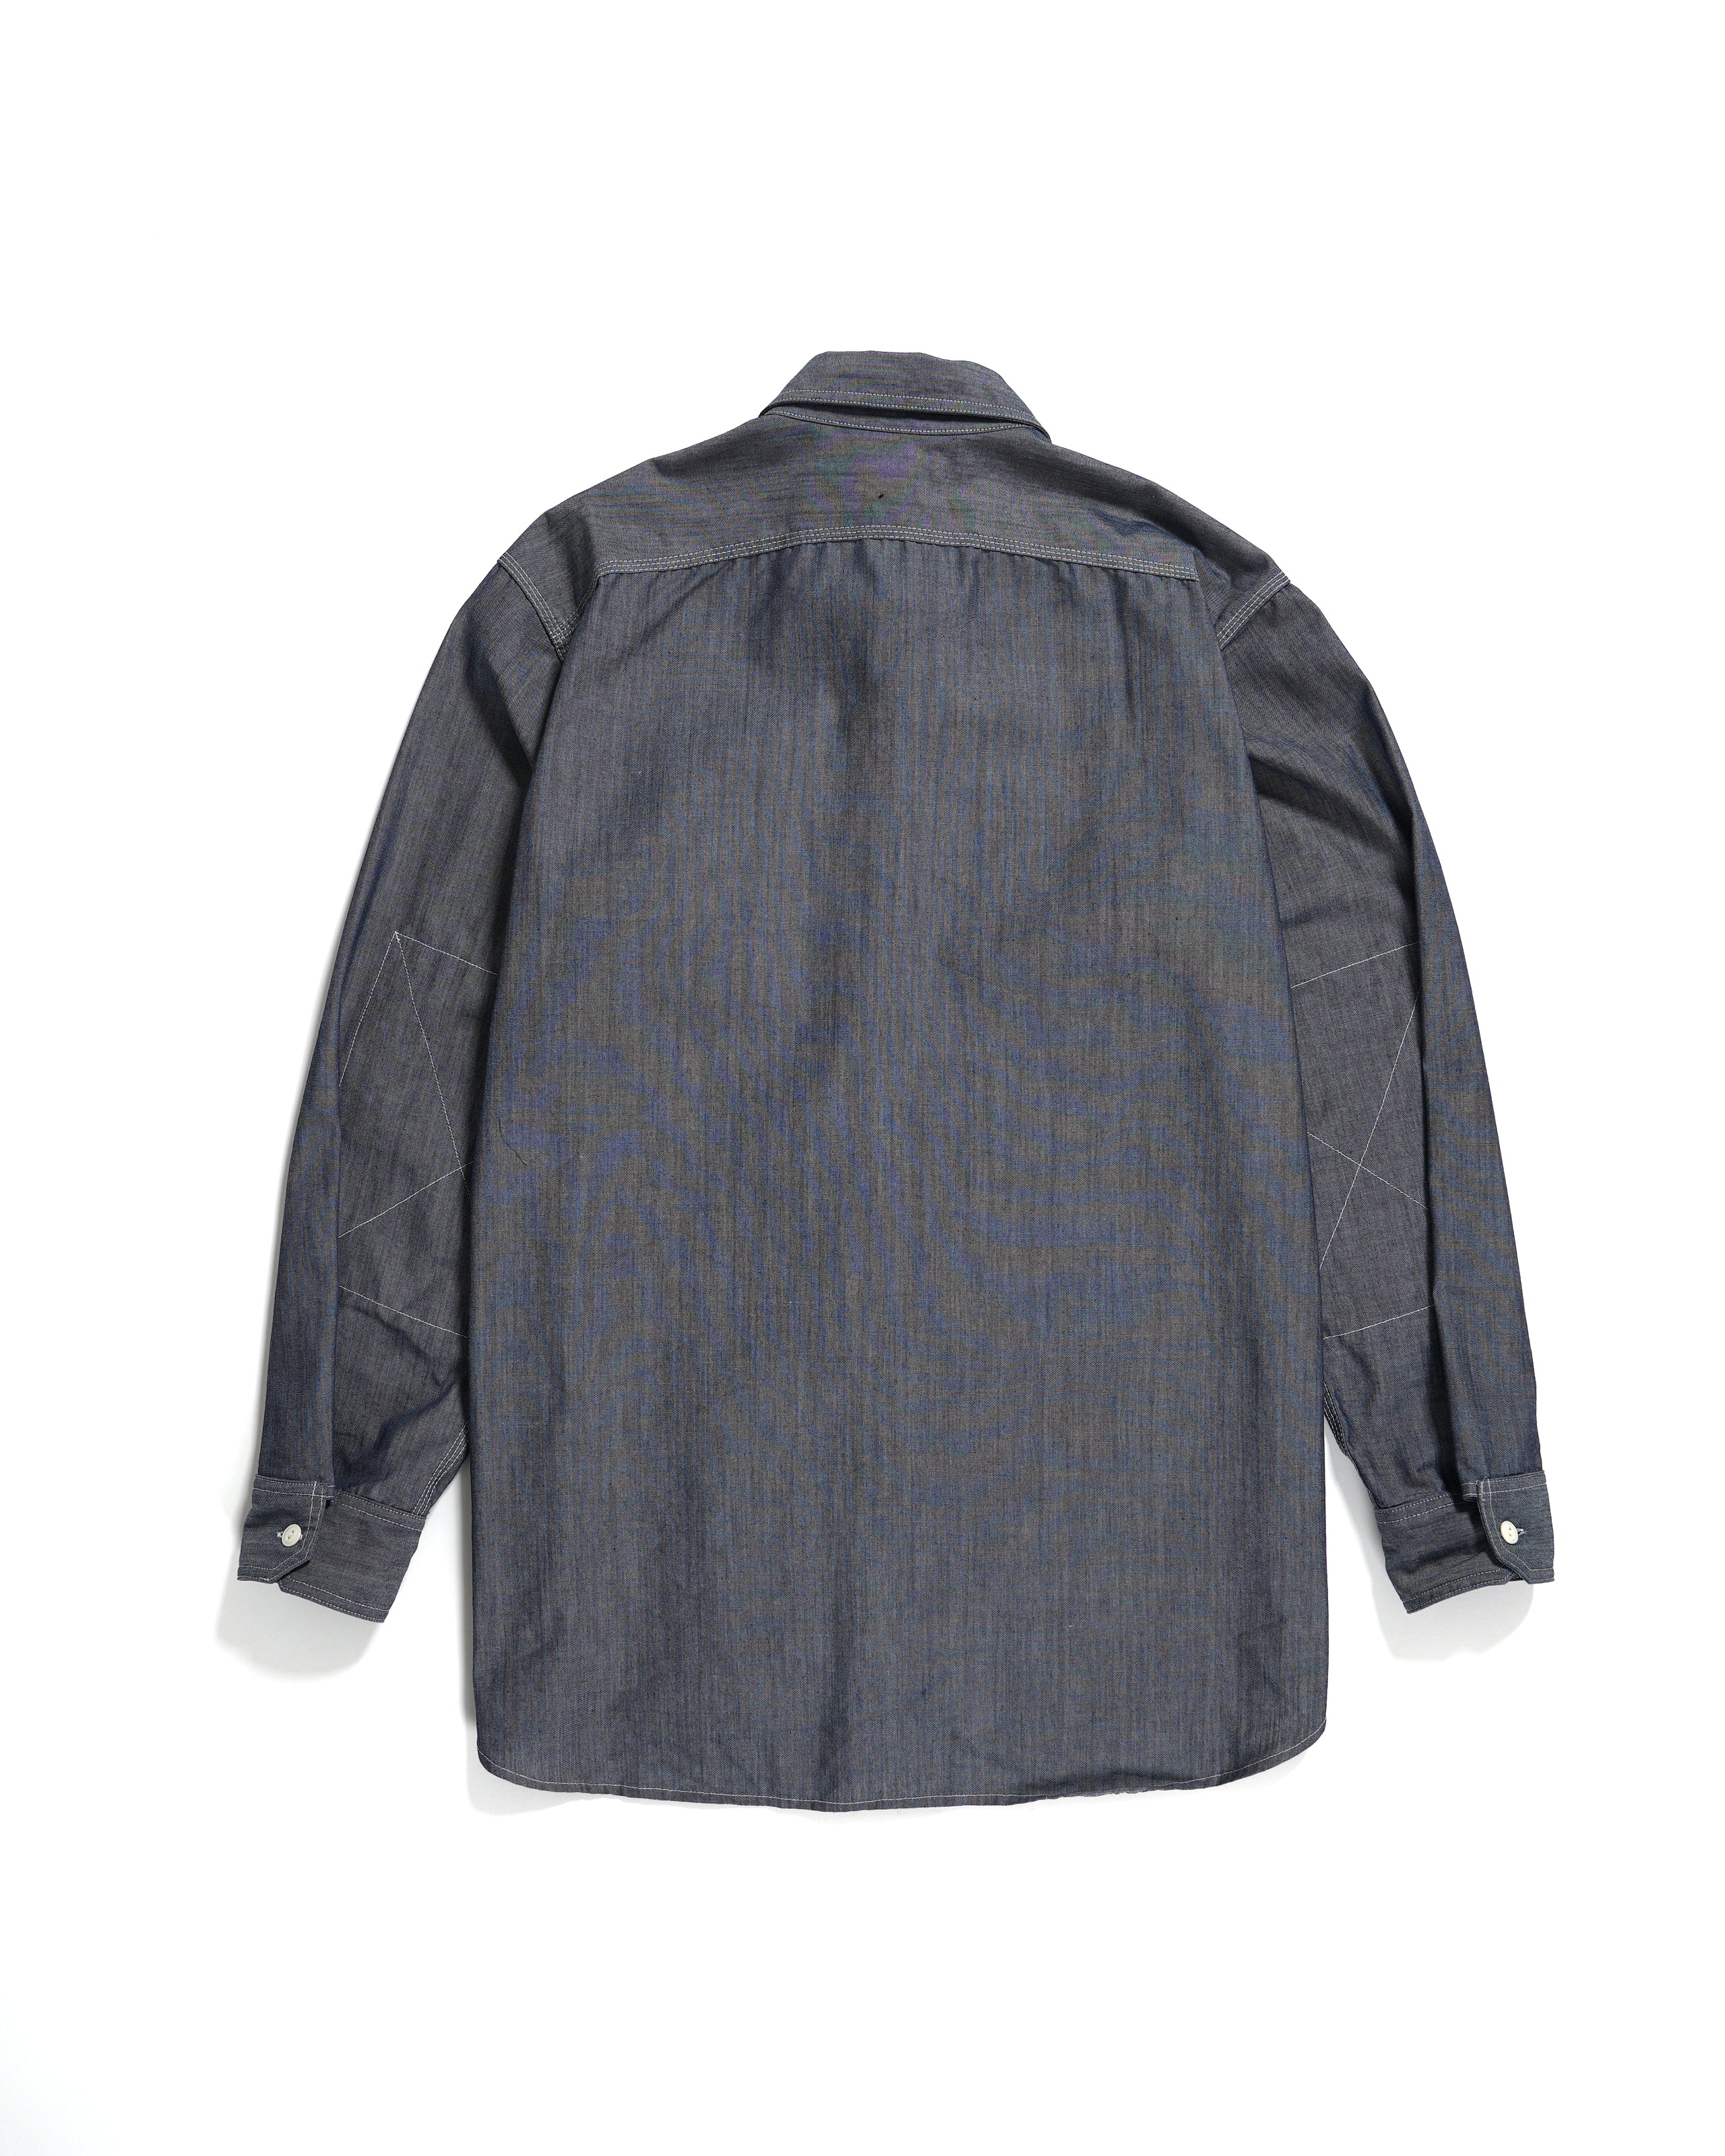 Work Shirt - Blue Cotton Chambray